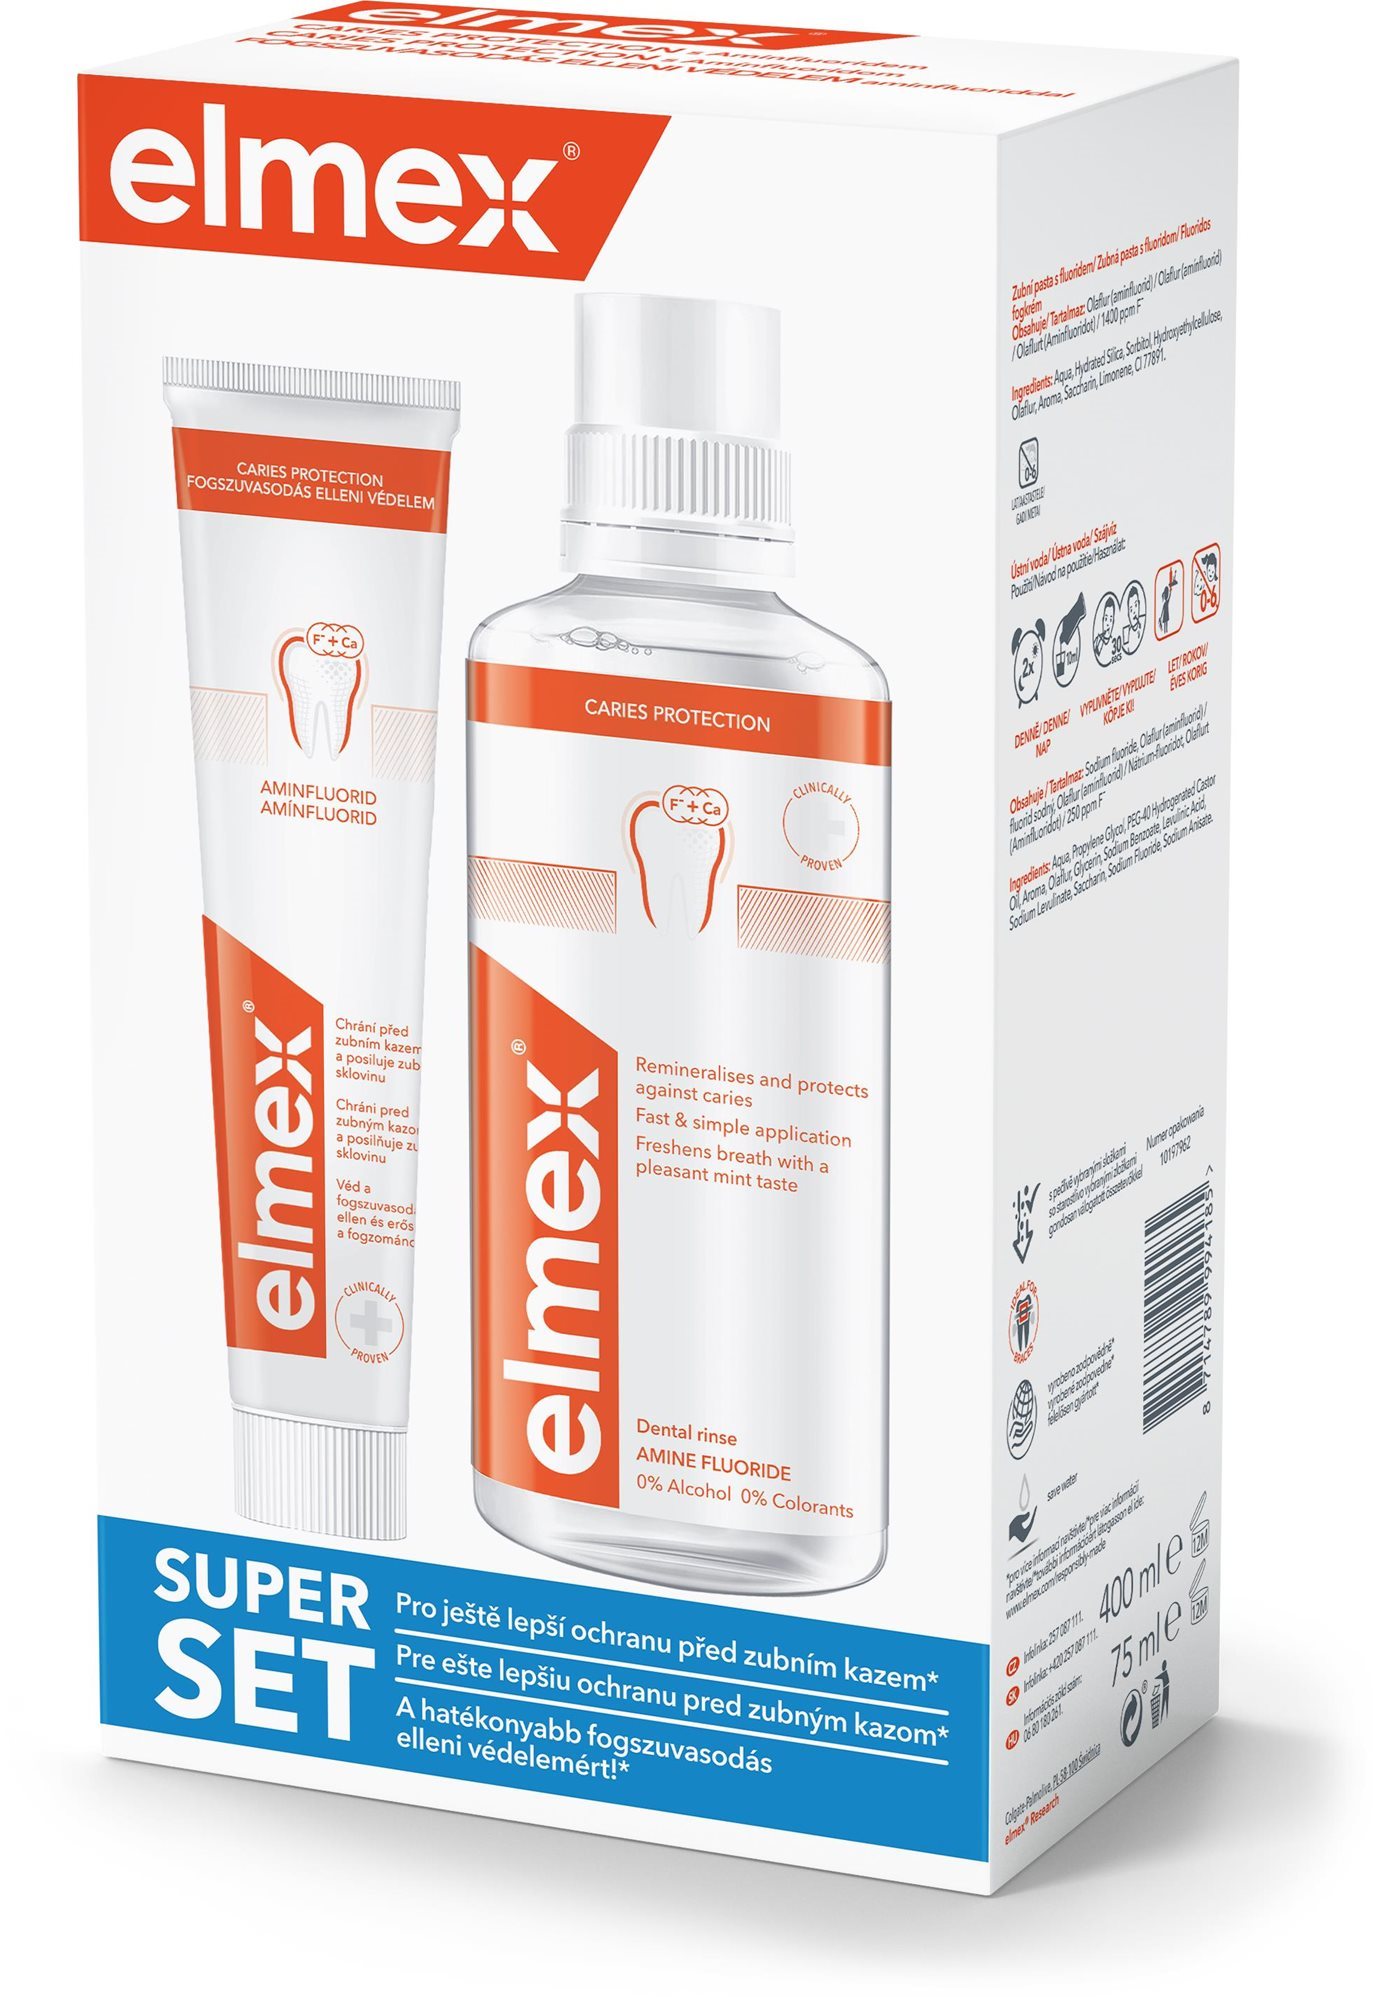 ELMEX Caries Protection Pack - 400 ml + 75 ml